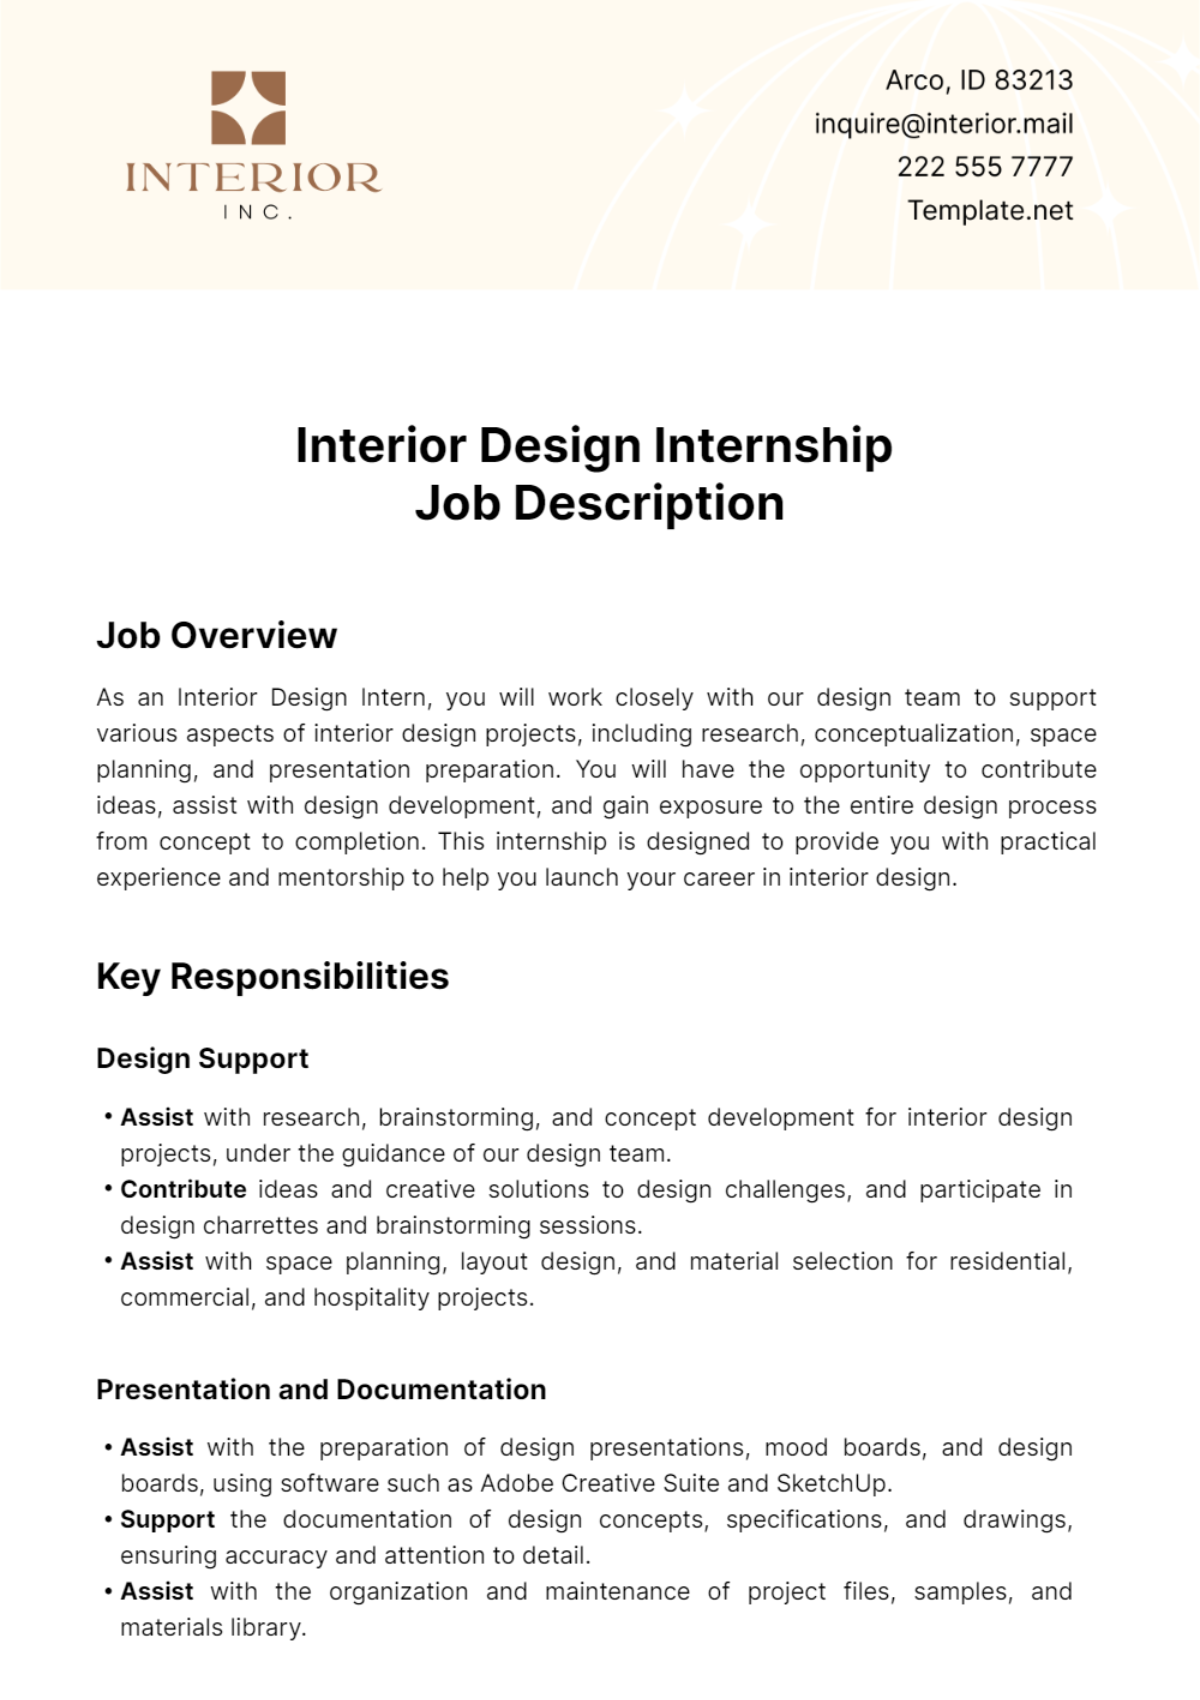 Free Interior Design Internship Job Description Template